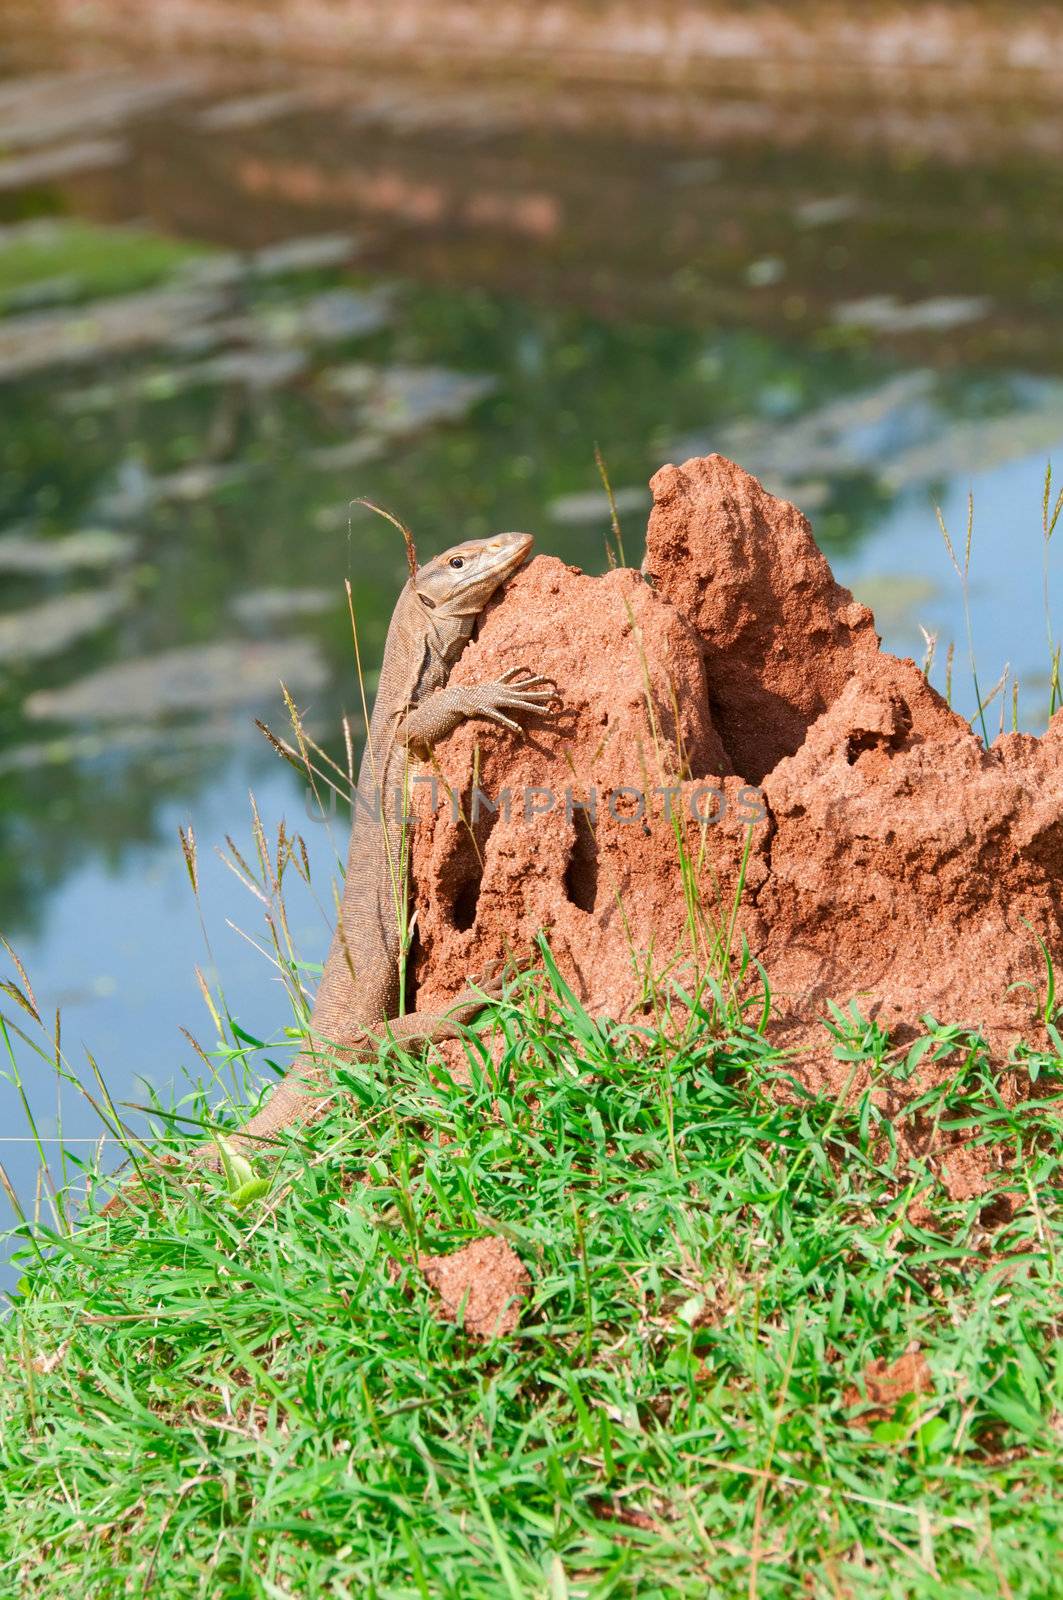 Portrait of a wild Varanus on termitary with water on background, Sri Lanka, selective focus on the animal.